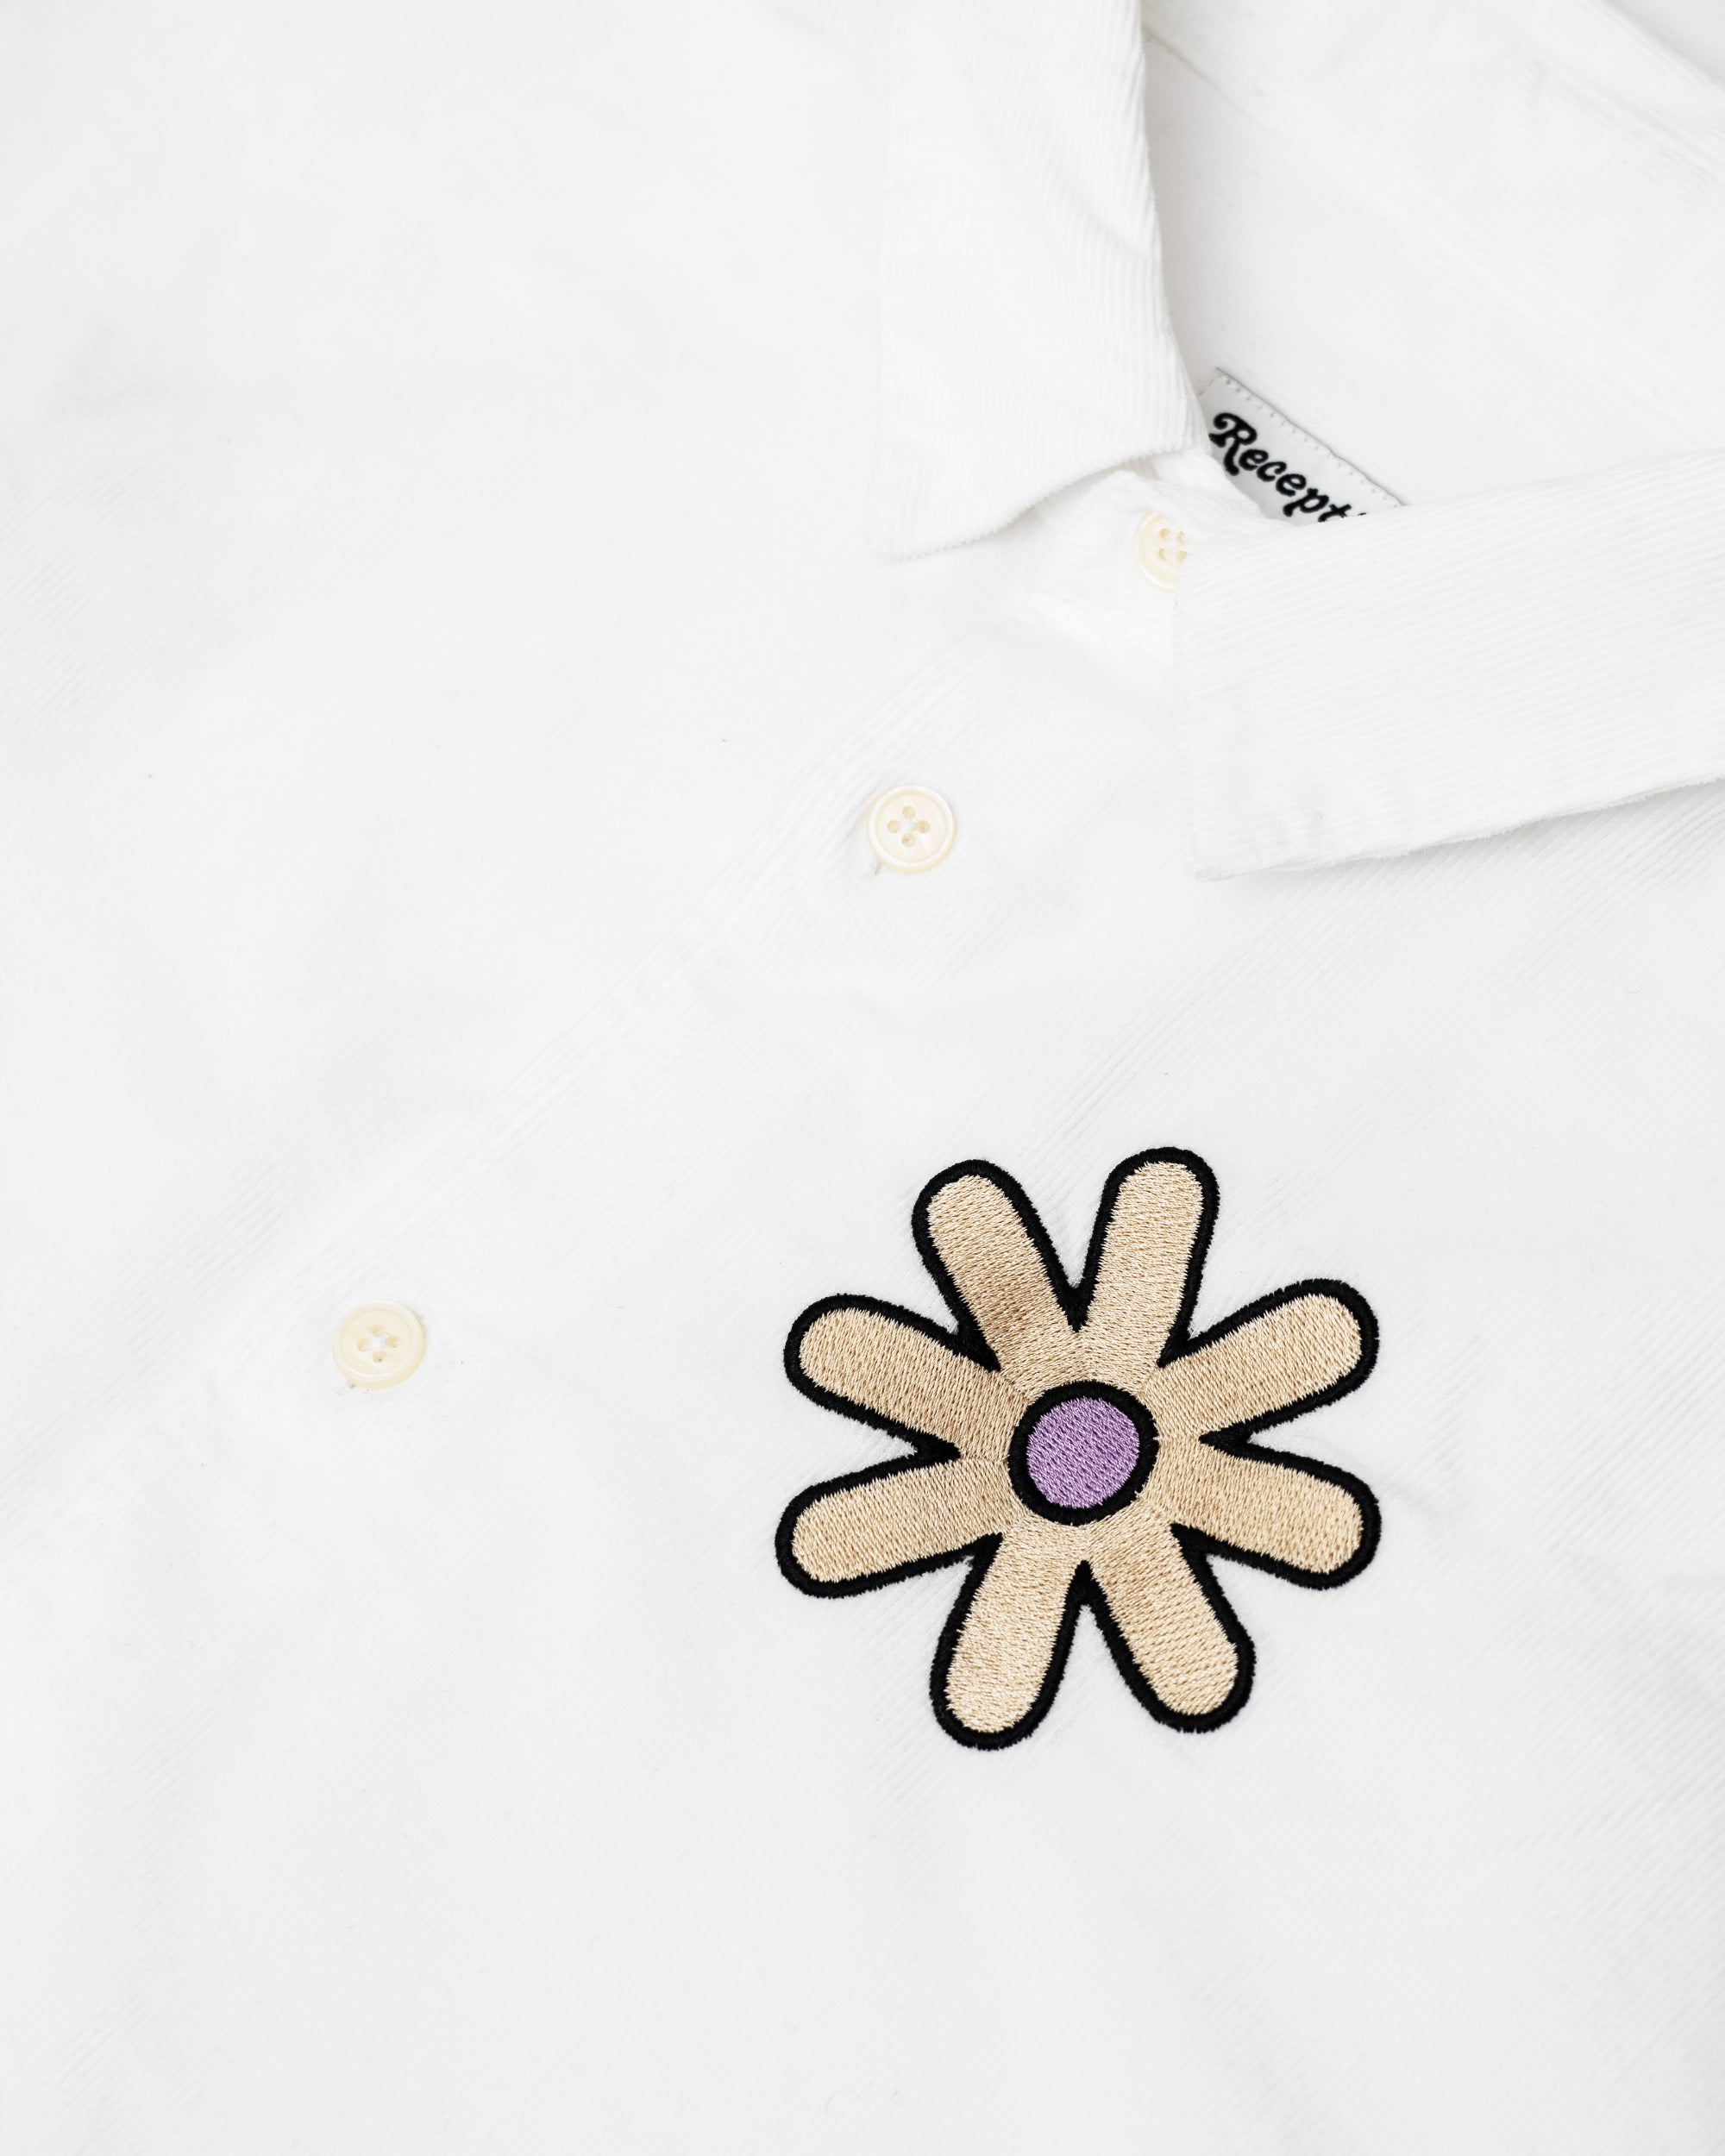 Reception - Shirt - Flowers - Loose Financial Shirt - White